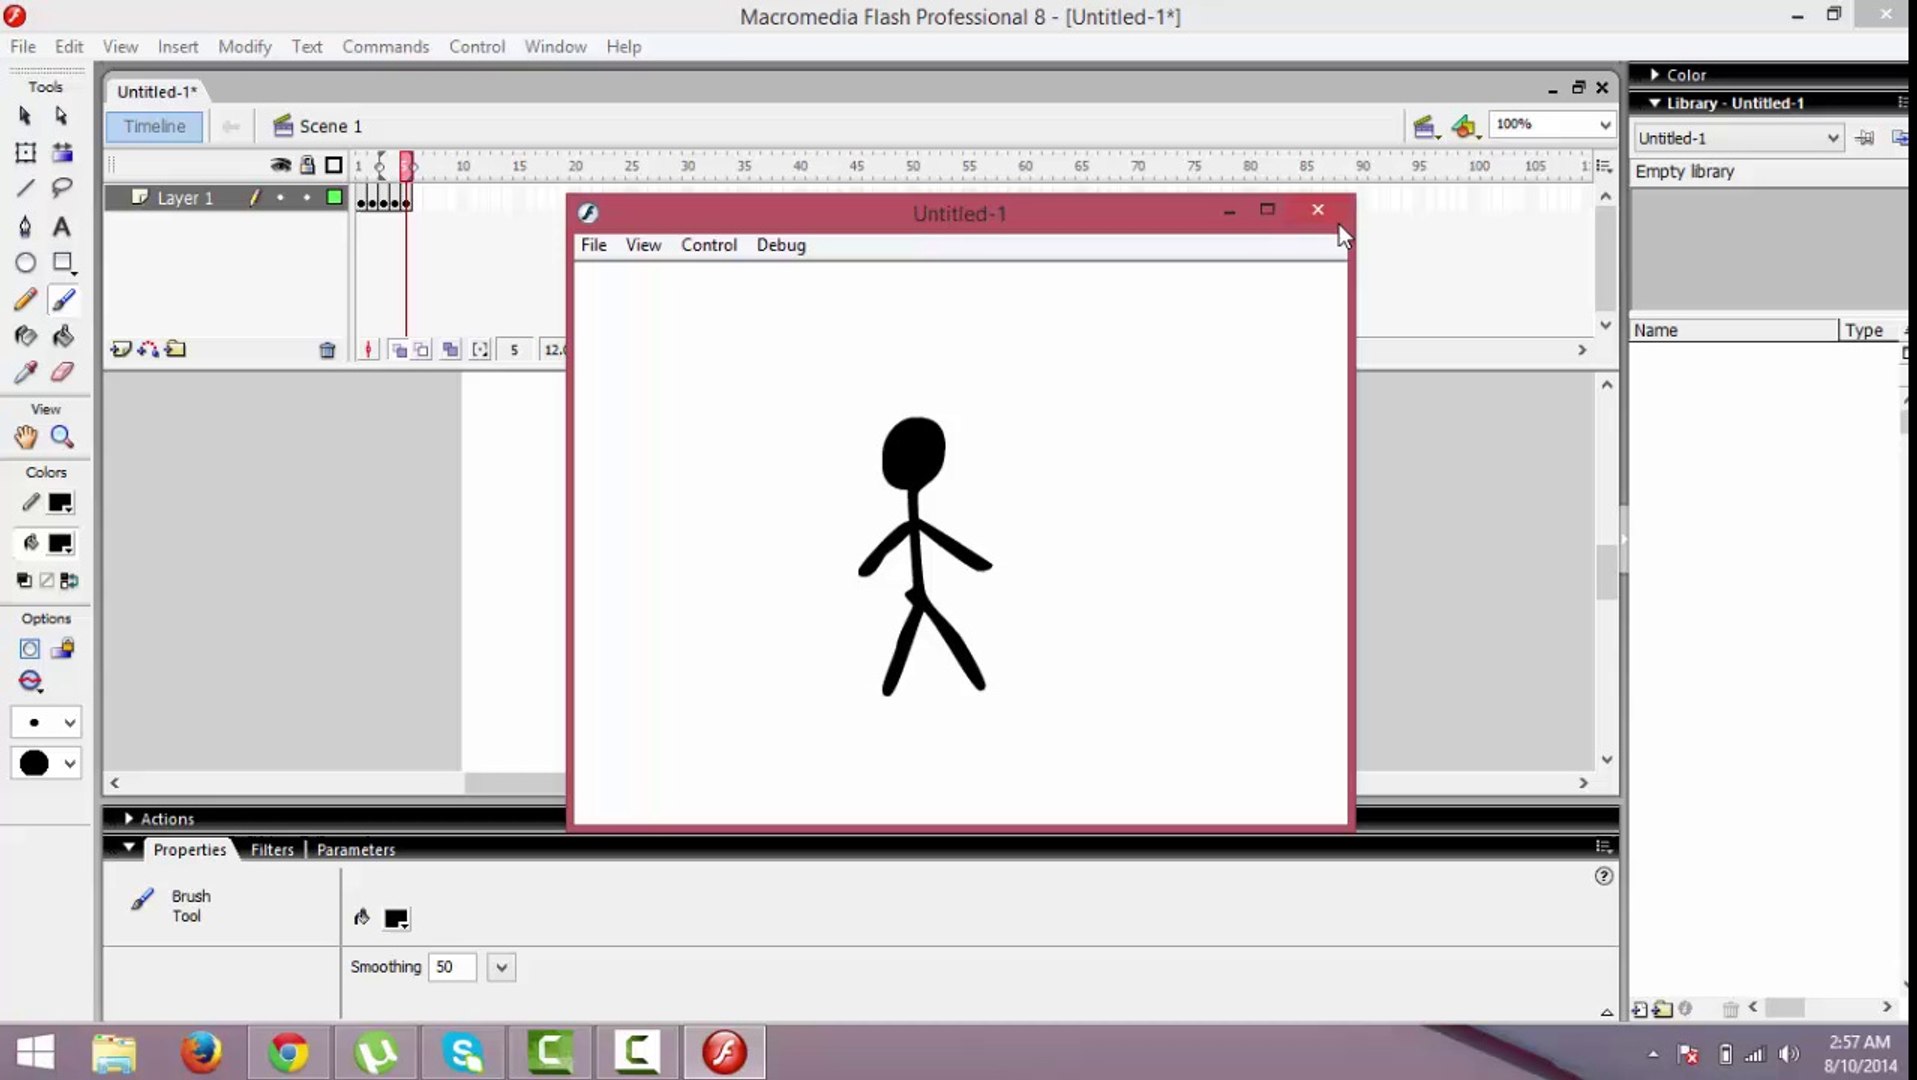 Macromedia flash 8 frame to frame animation - video Dailymotion